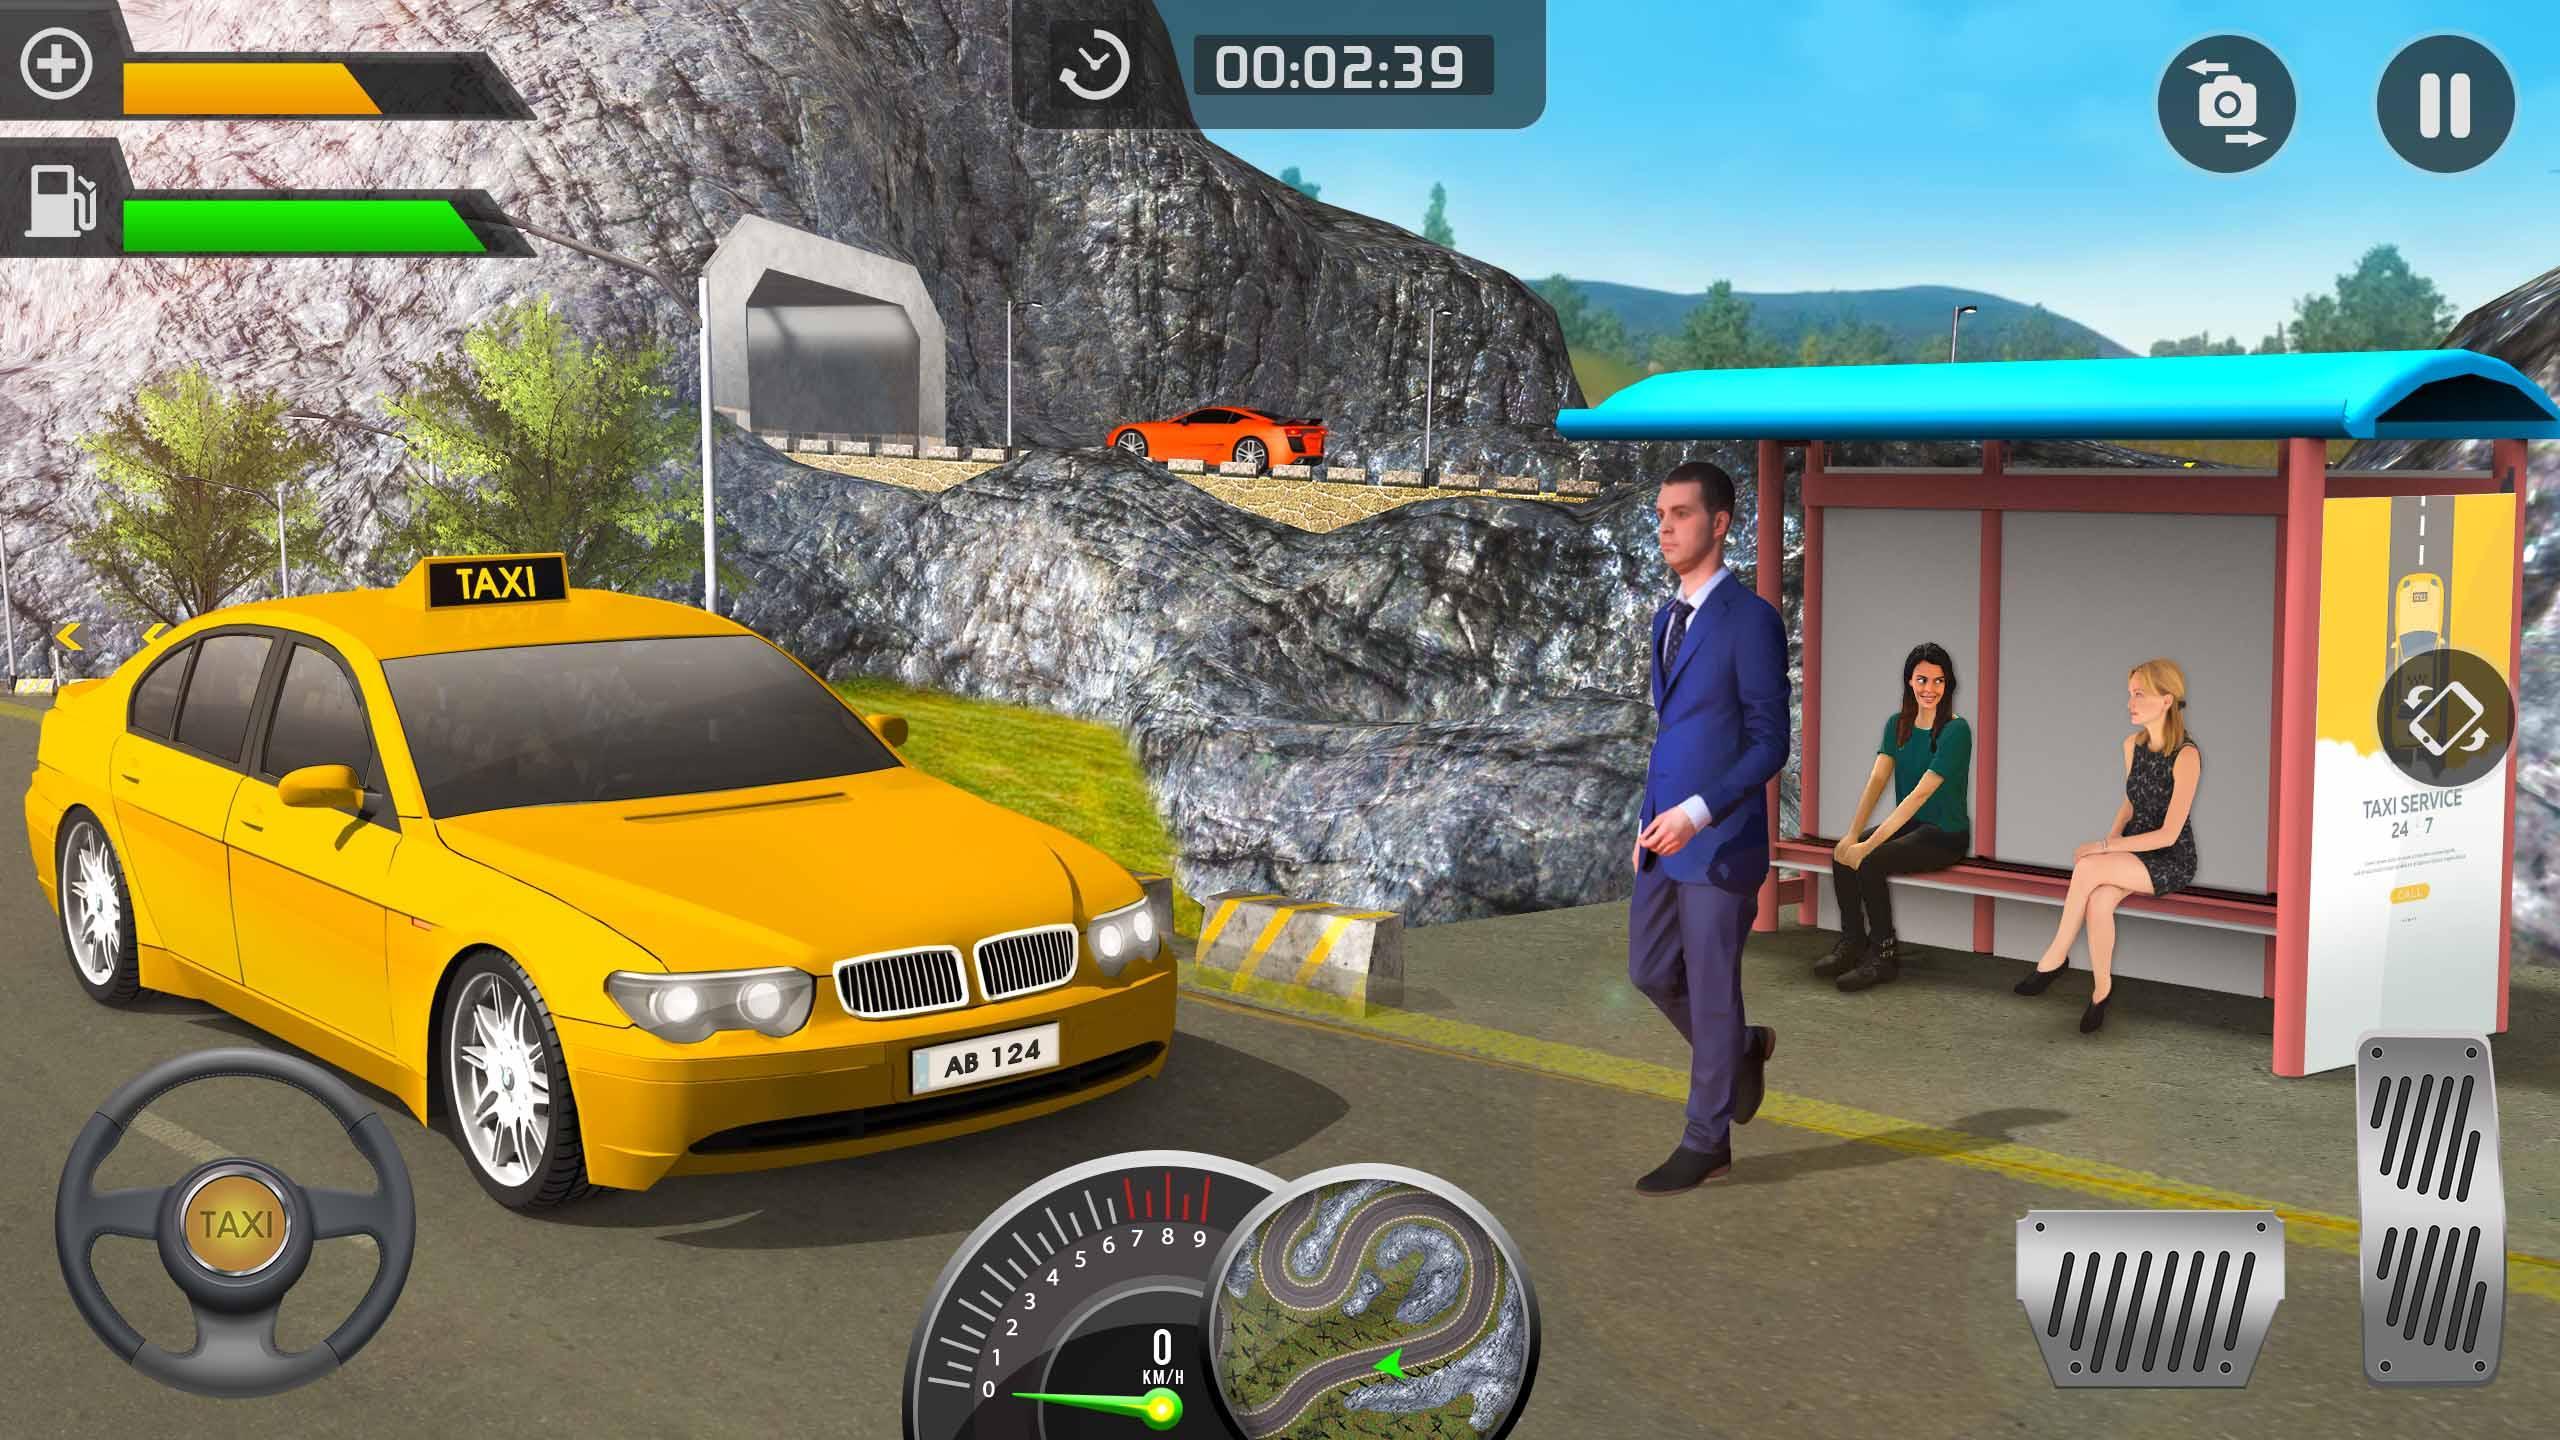 Modern Taxi Drive Parking 3D Game: Taxi Games 2020 1.1.06 Screenshot 1